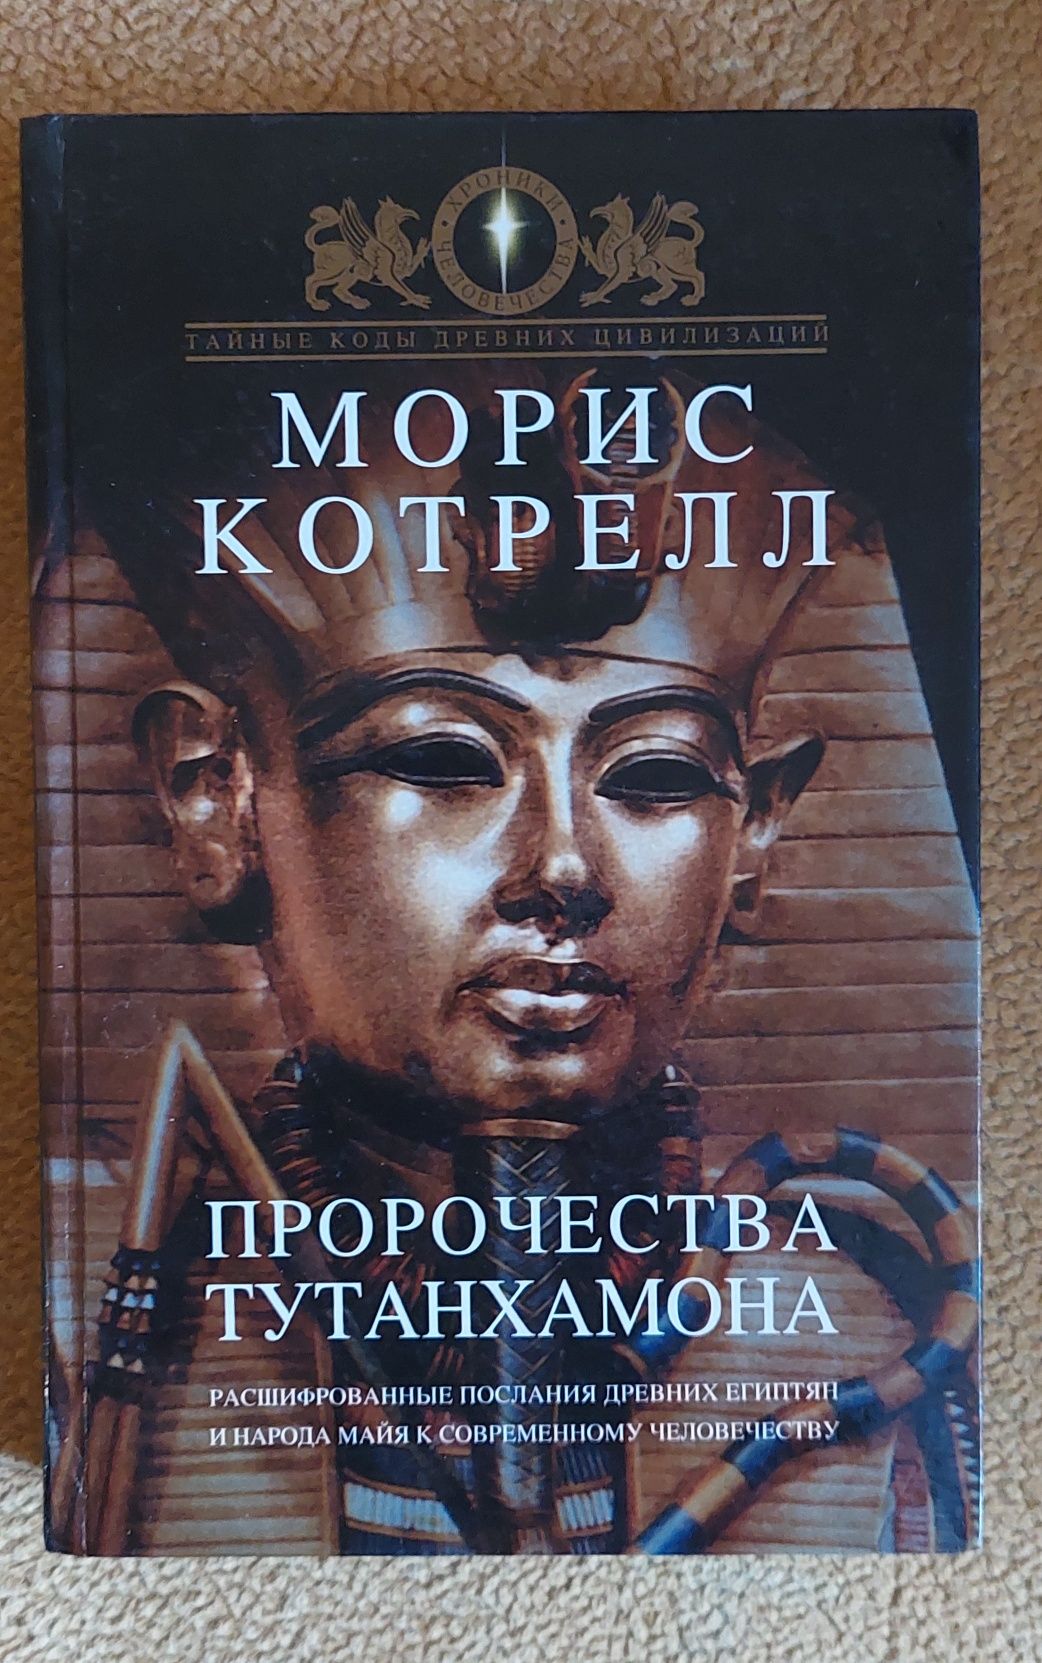 Книга Морис Котрелл " Пророчества Тутанхомона"